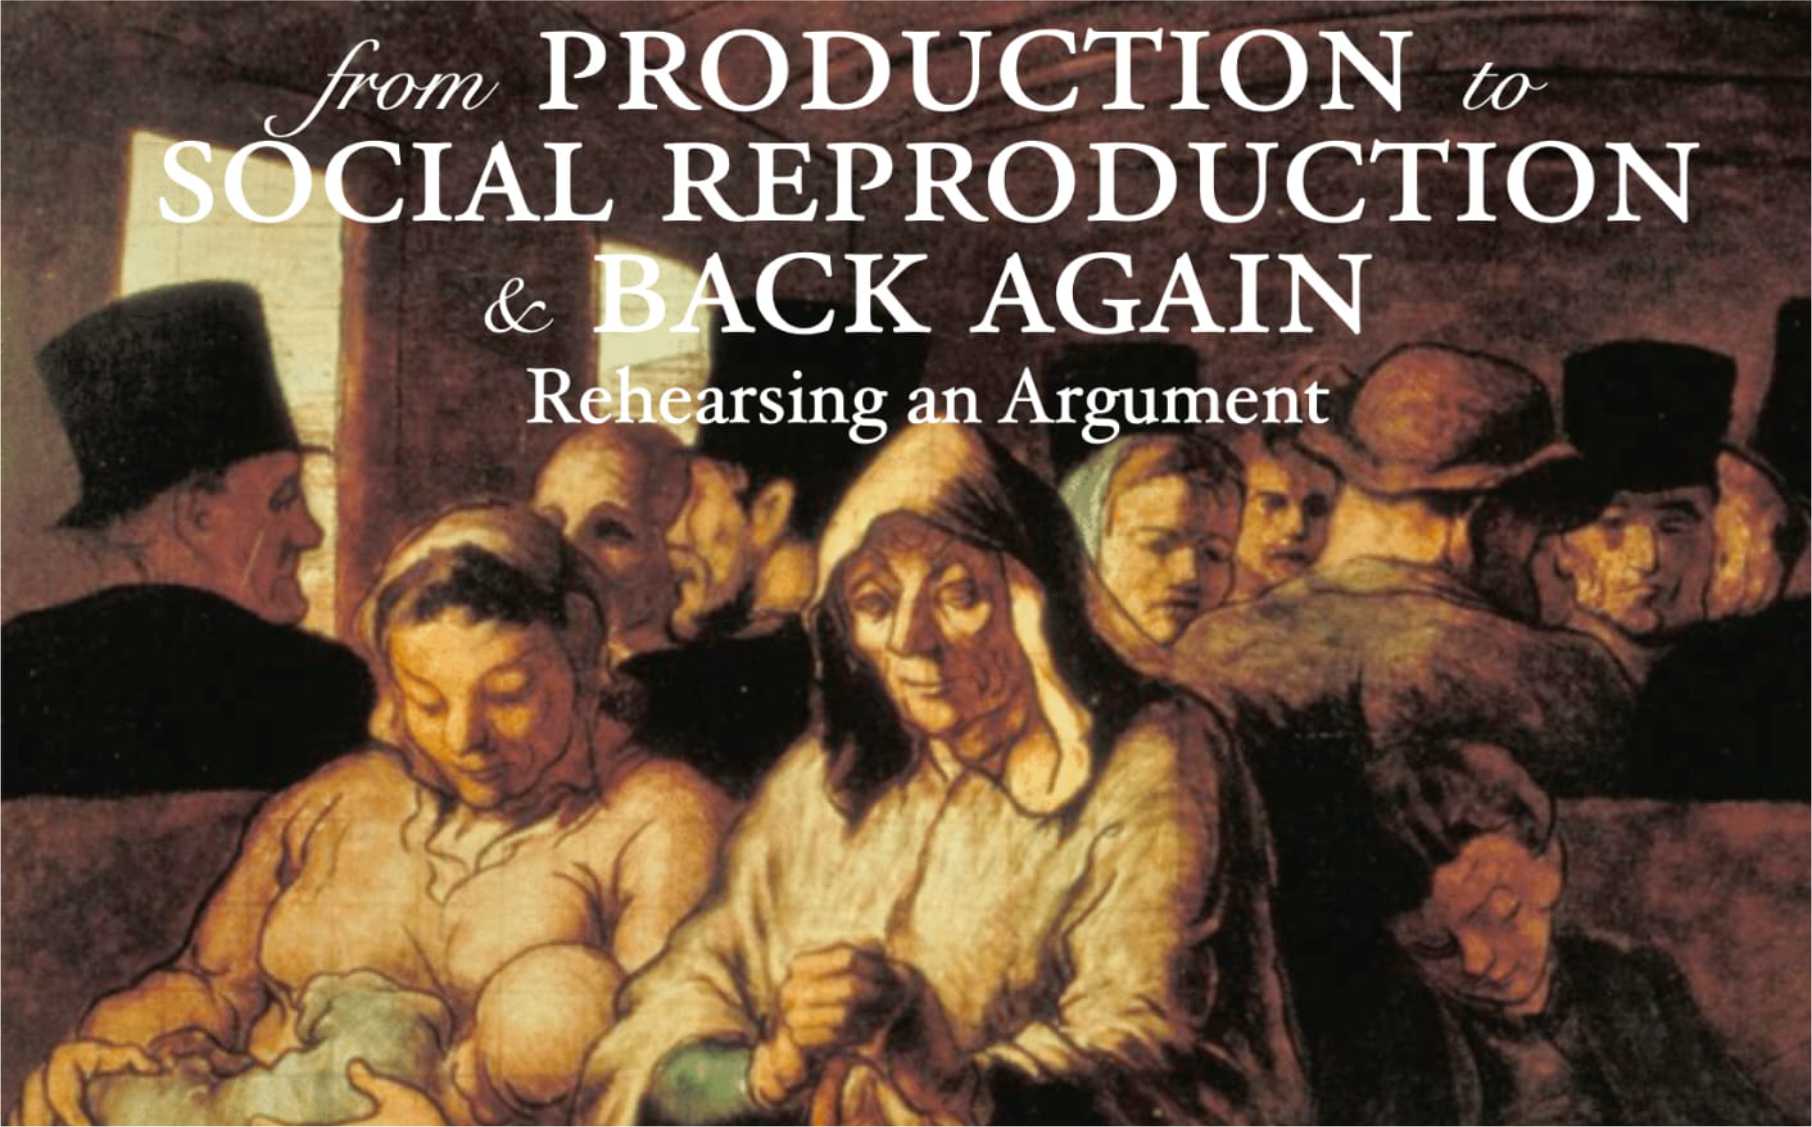 From Production to Social Reproduction & Back Again duyuru görseli